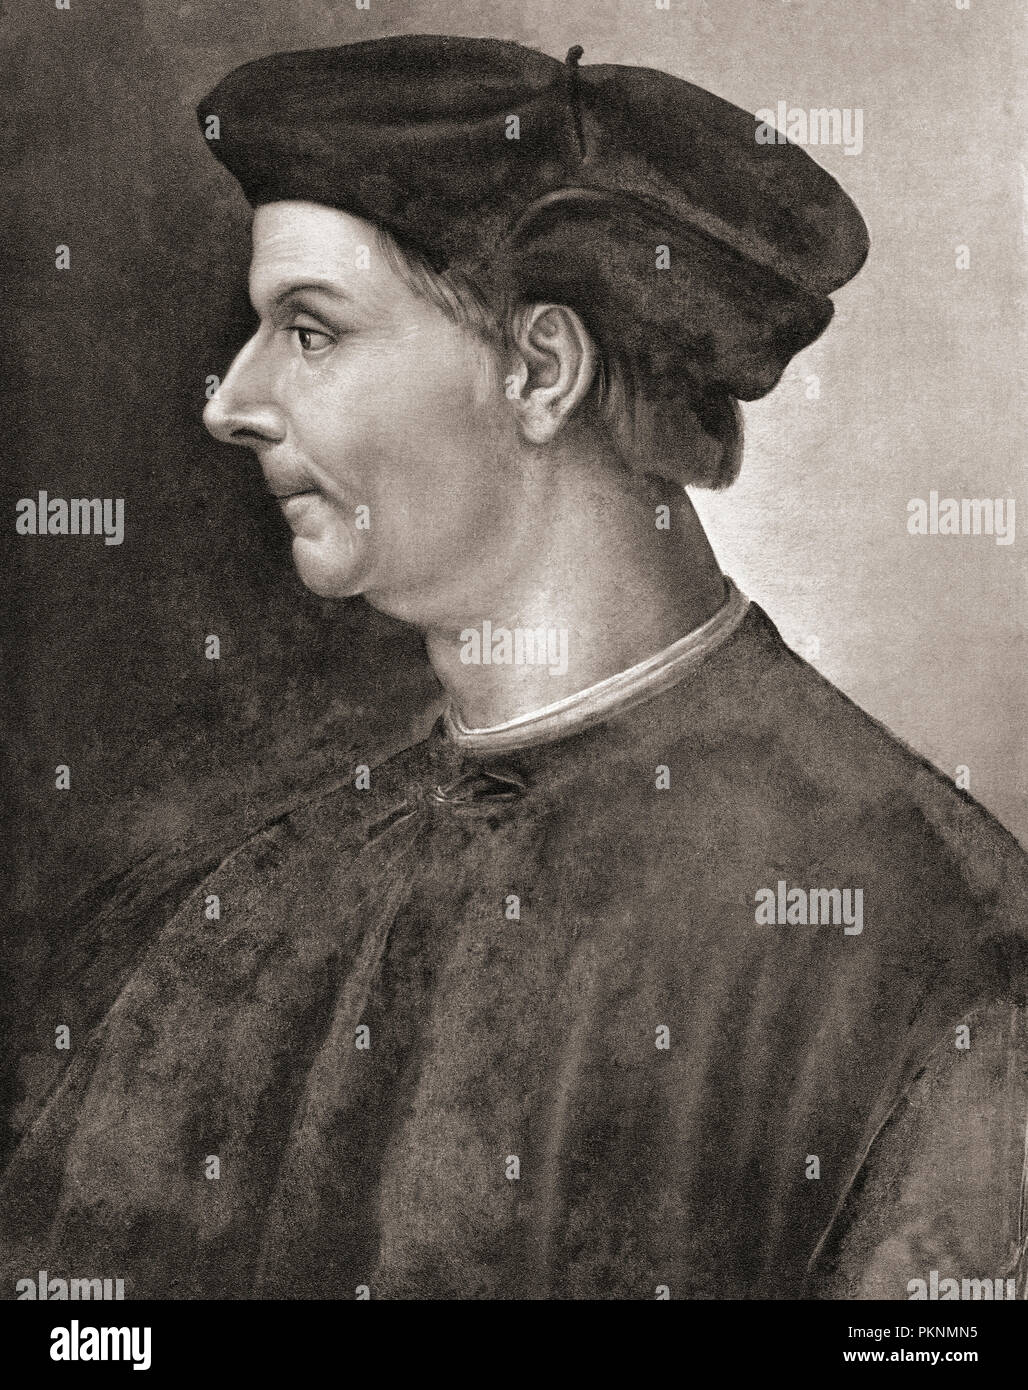 Niccolò di Bernardo dei Machiavelli,1469 – 1527.  Italian diplomat, politician, historian, philosopher, humanist and writer of the Renaissance period. Stock Photo